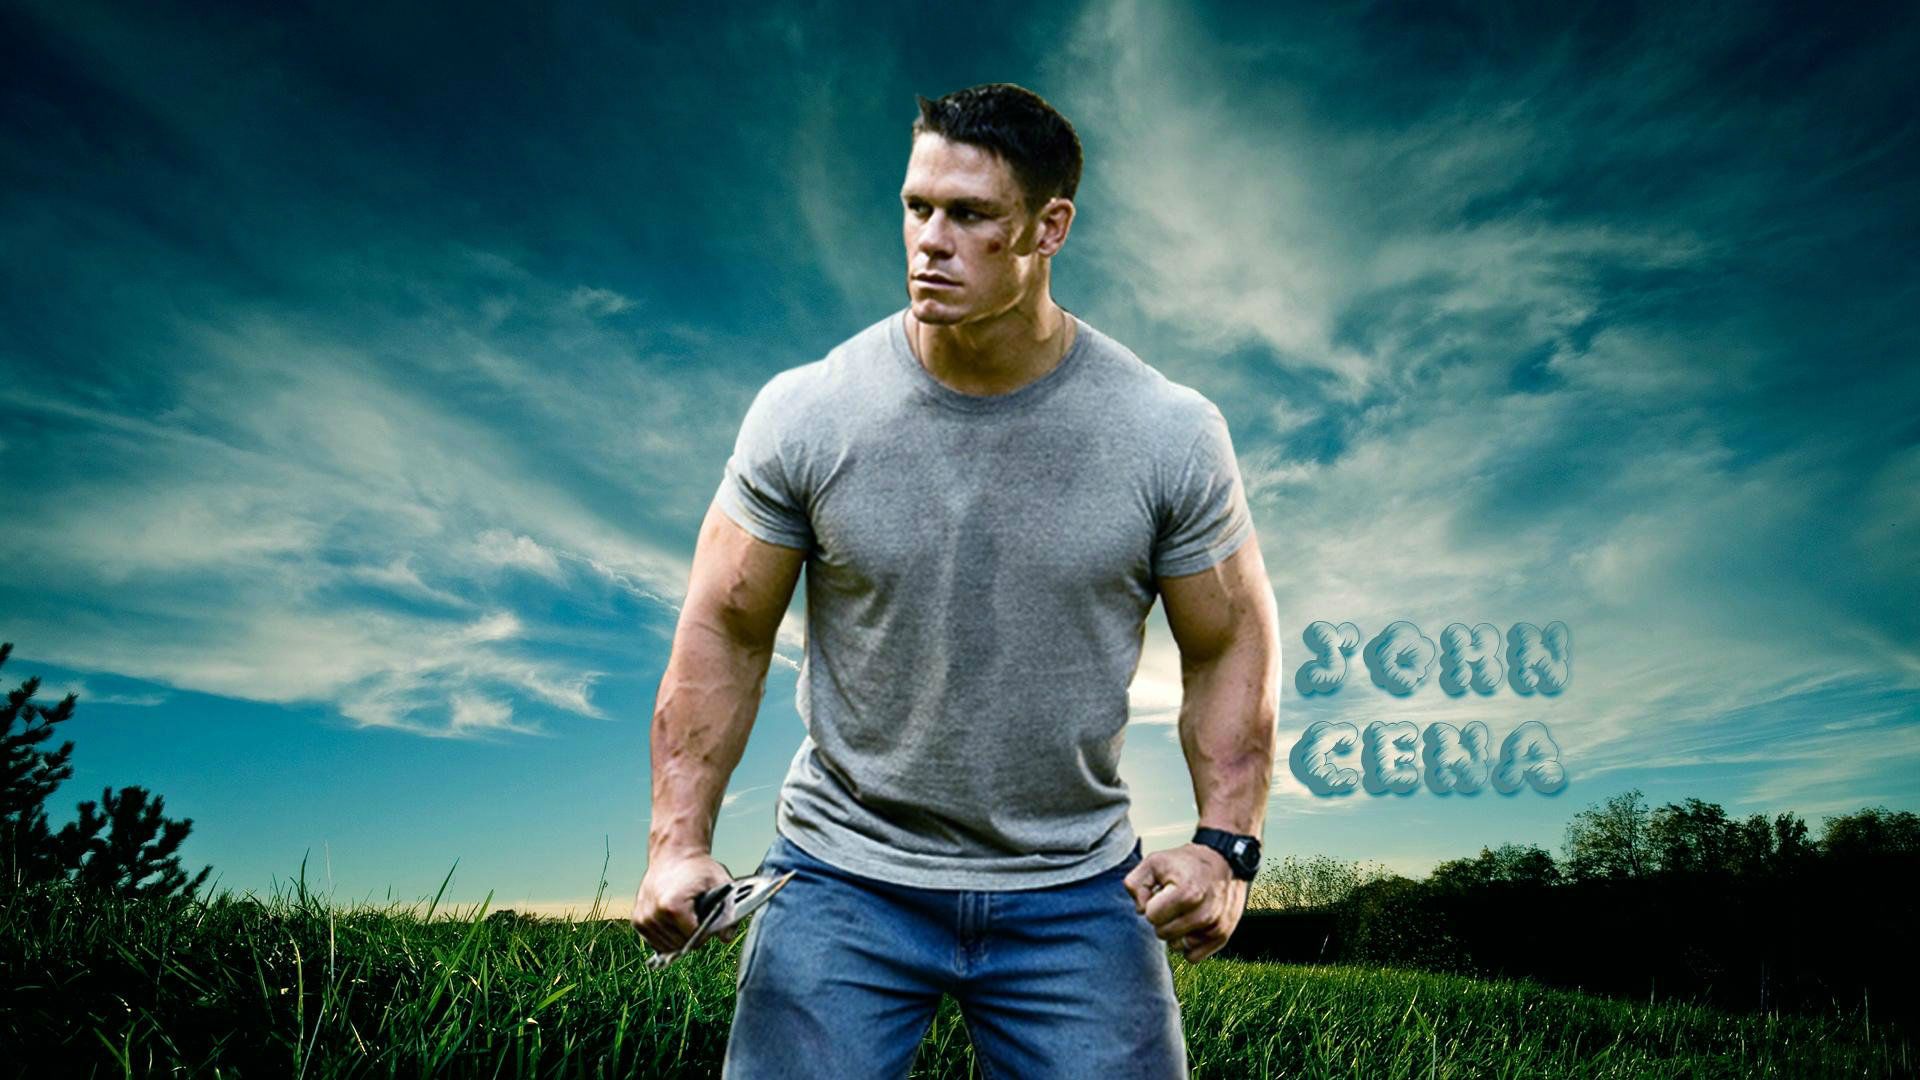 John Cena WWE HD Wallpapers Most HD Wallpapers Pictures Desktop